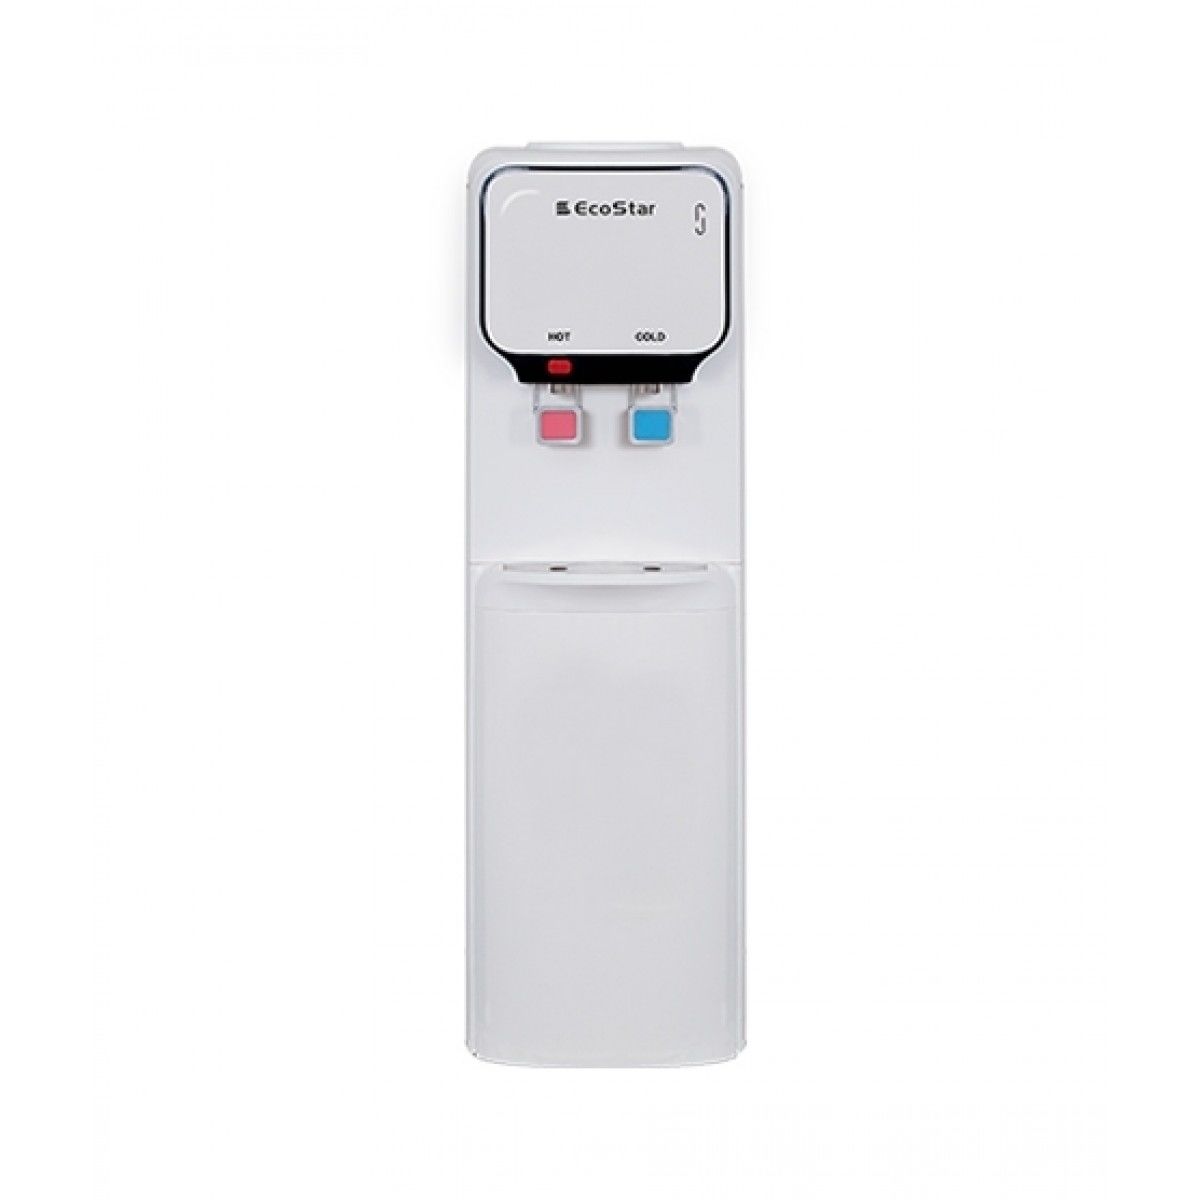 EcoStar 2 Tap Water Dispenser (WD-450F) Price in Pakistan | iShopping.pk